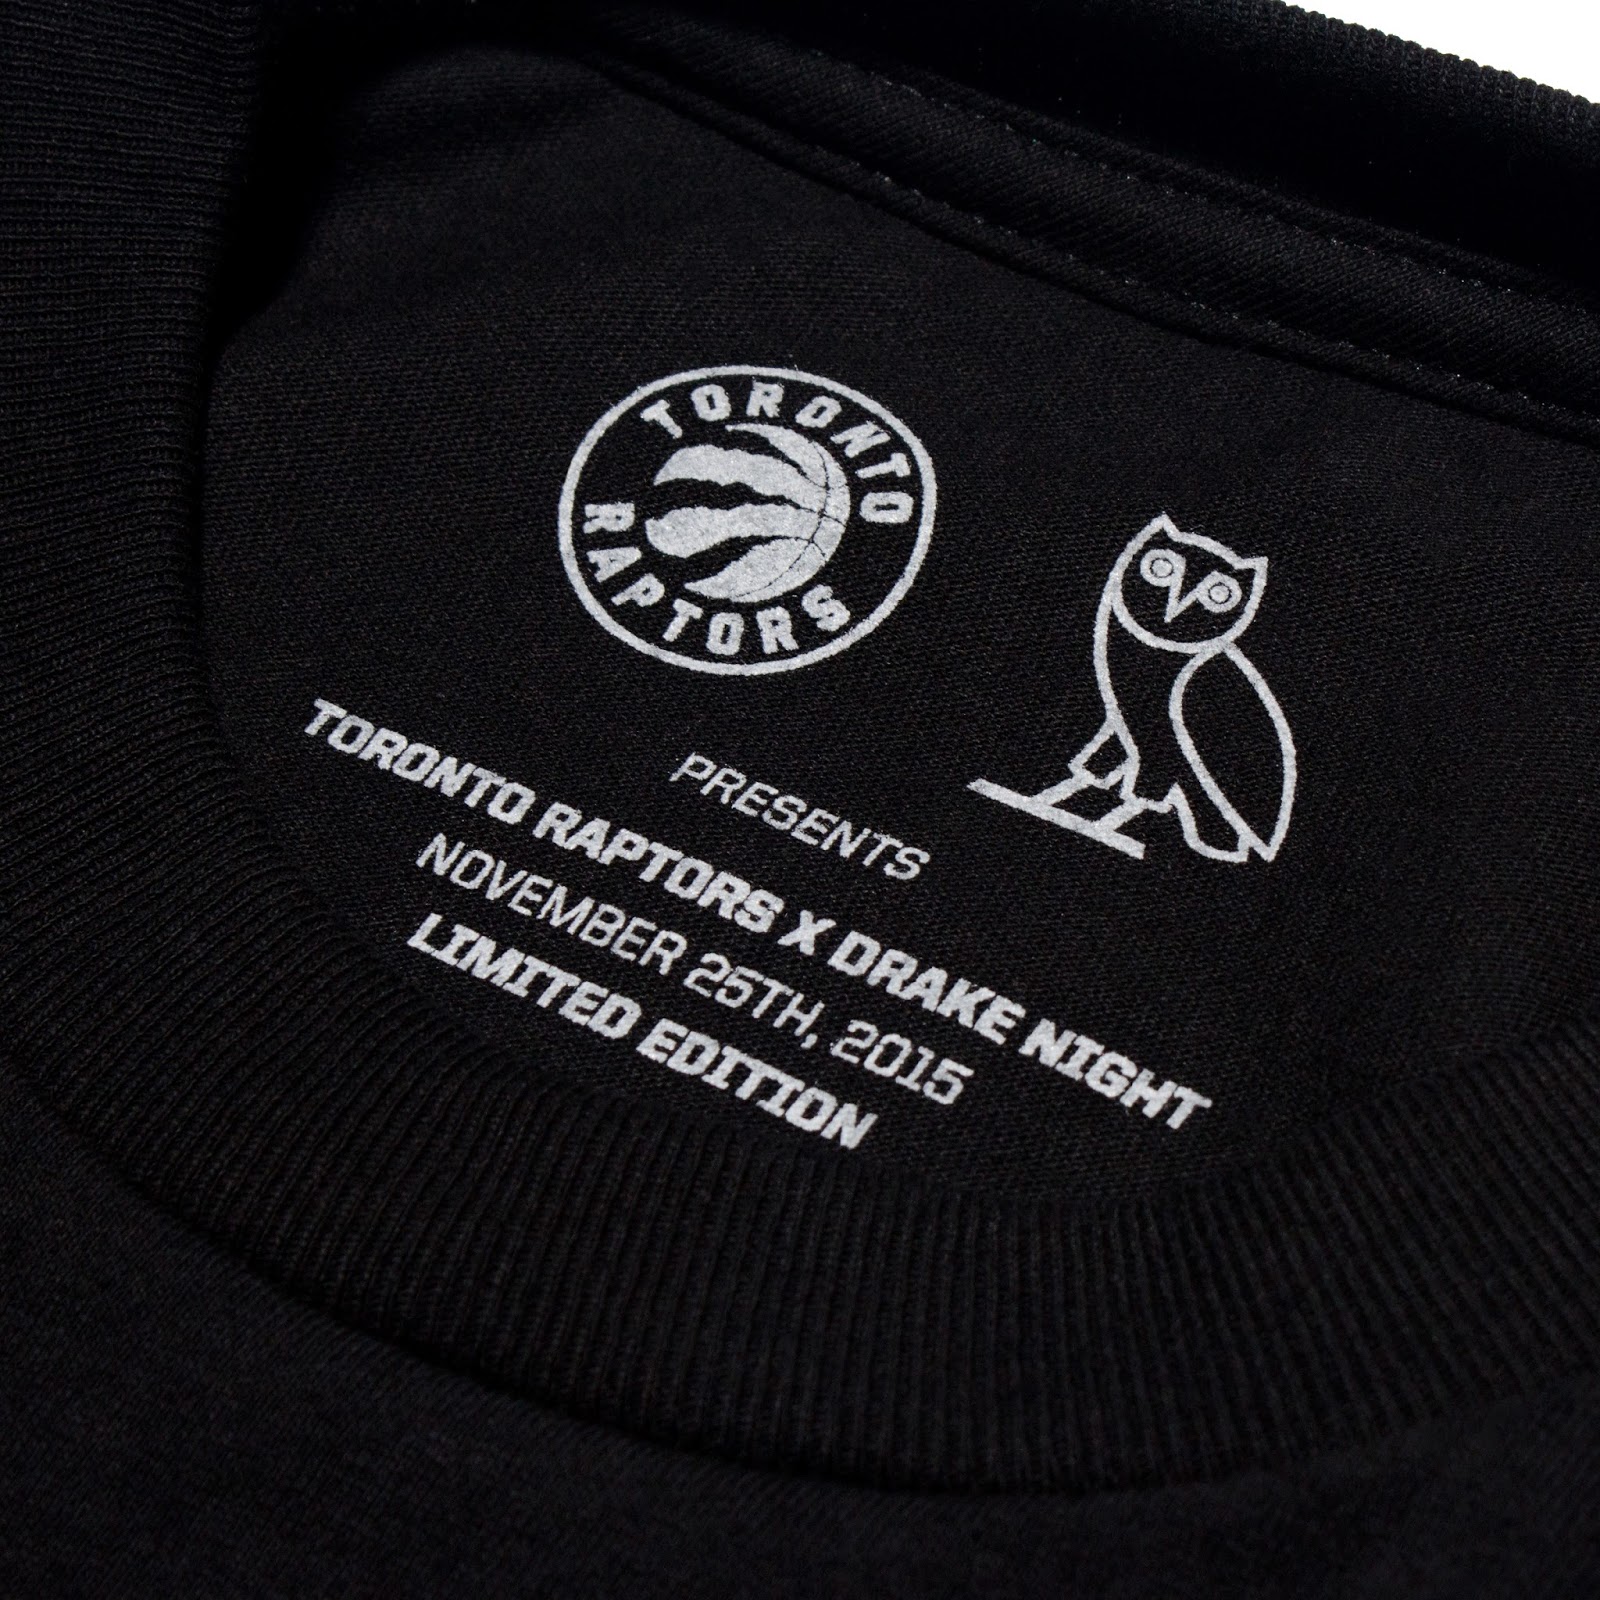 Drake Night OVO x Raptors Collaboration T-Shirt